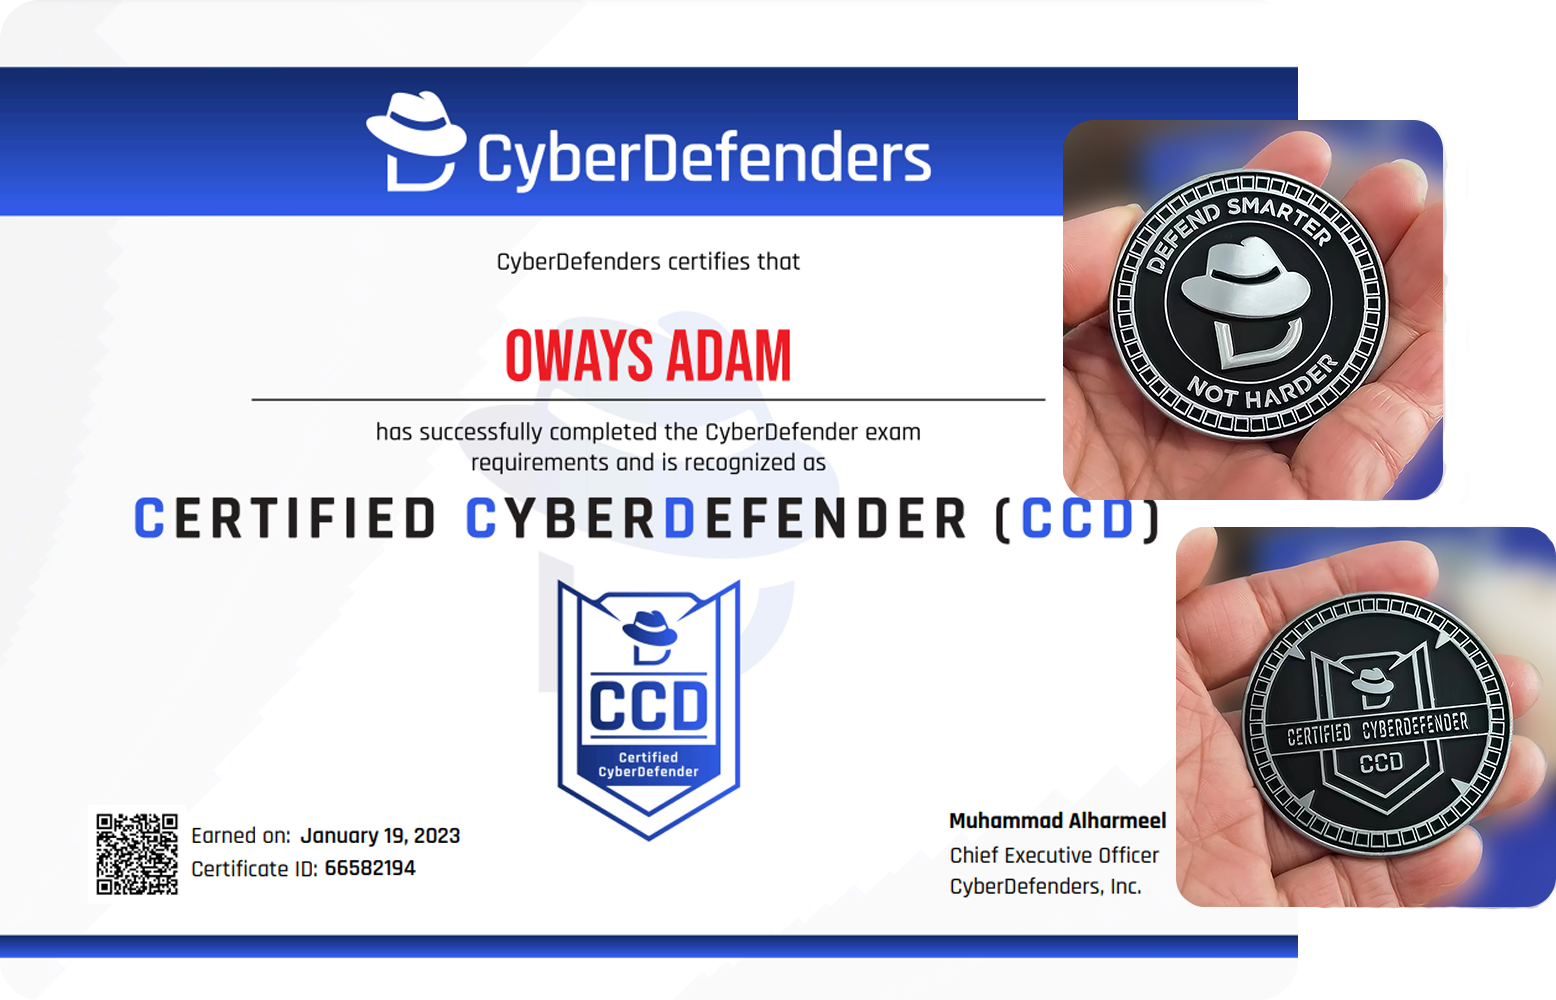 ccd_certification_blue_team_certification